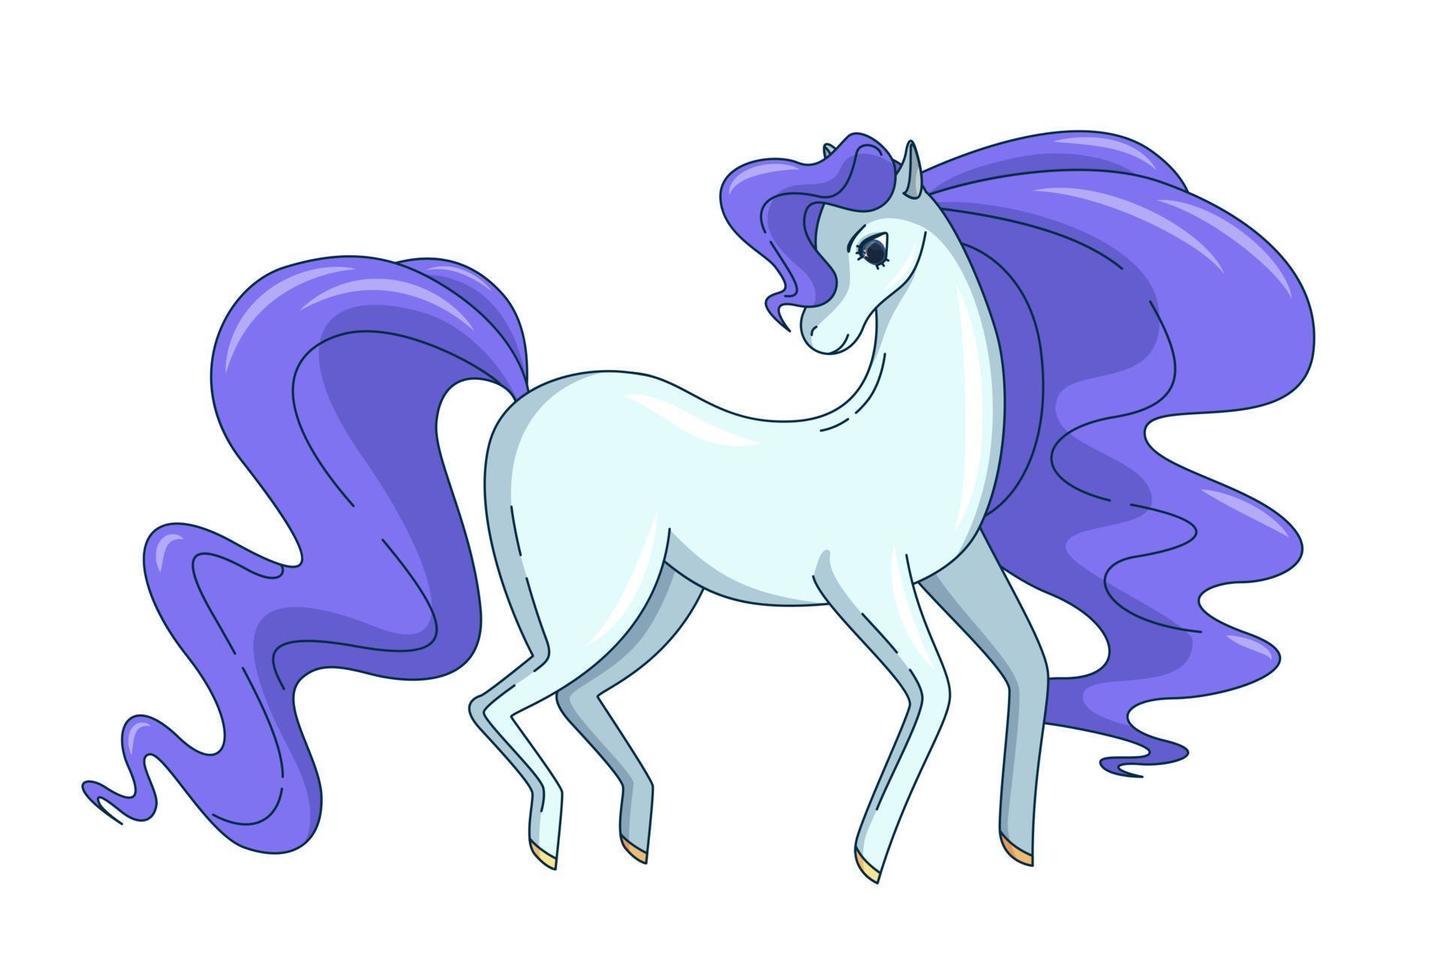 bonito caballo con melena y cola ondulantes aislado sobre fondo blanco. ilustración vectorial en estilo de dibujos animados lindo vector